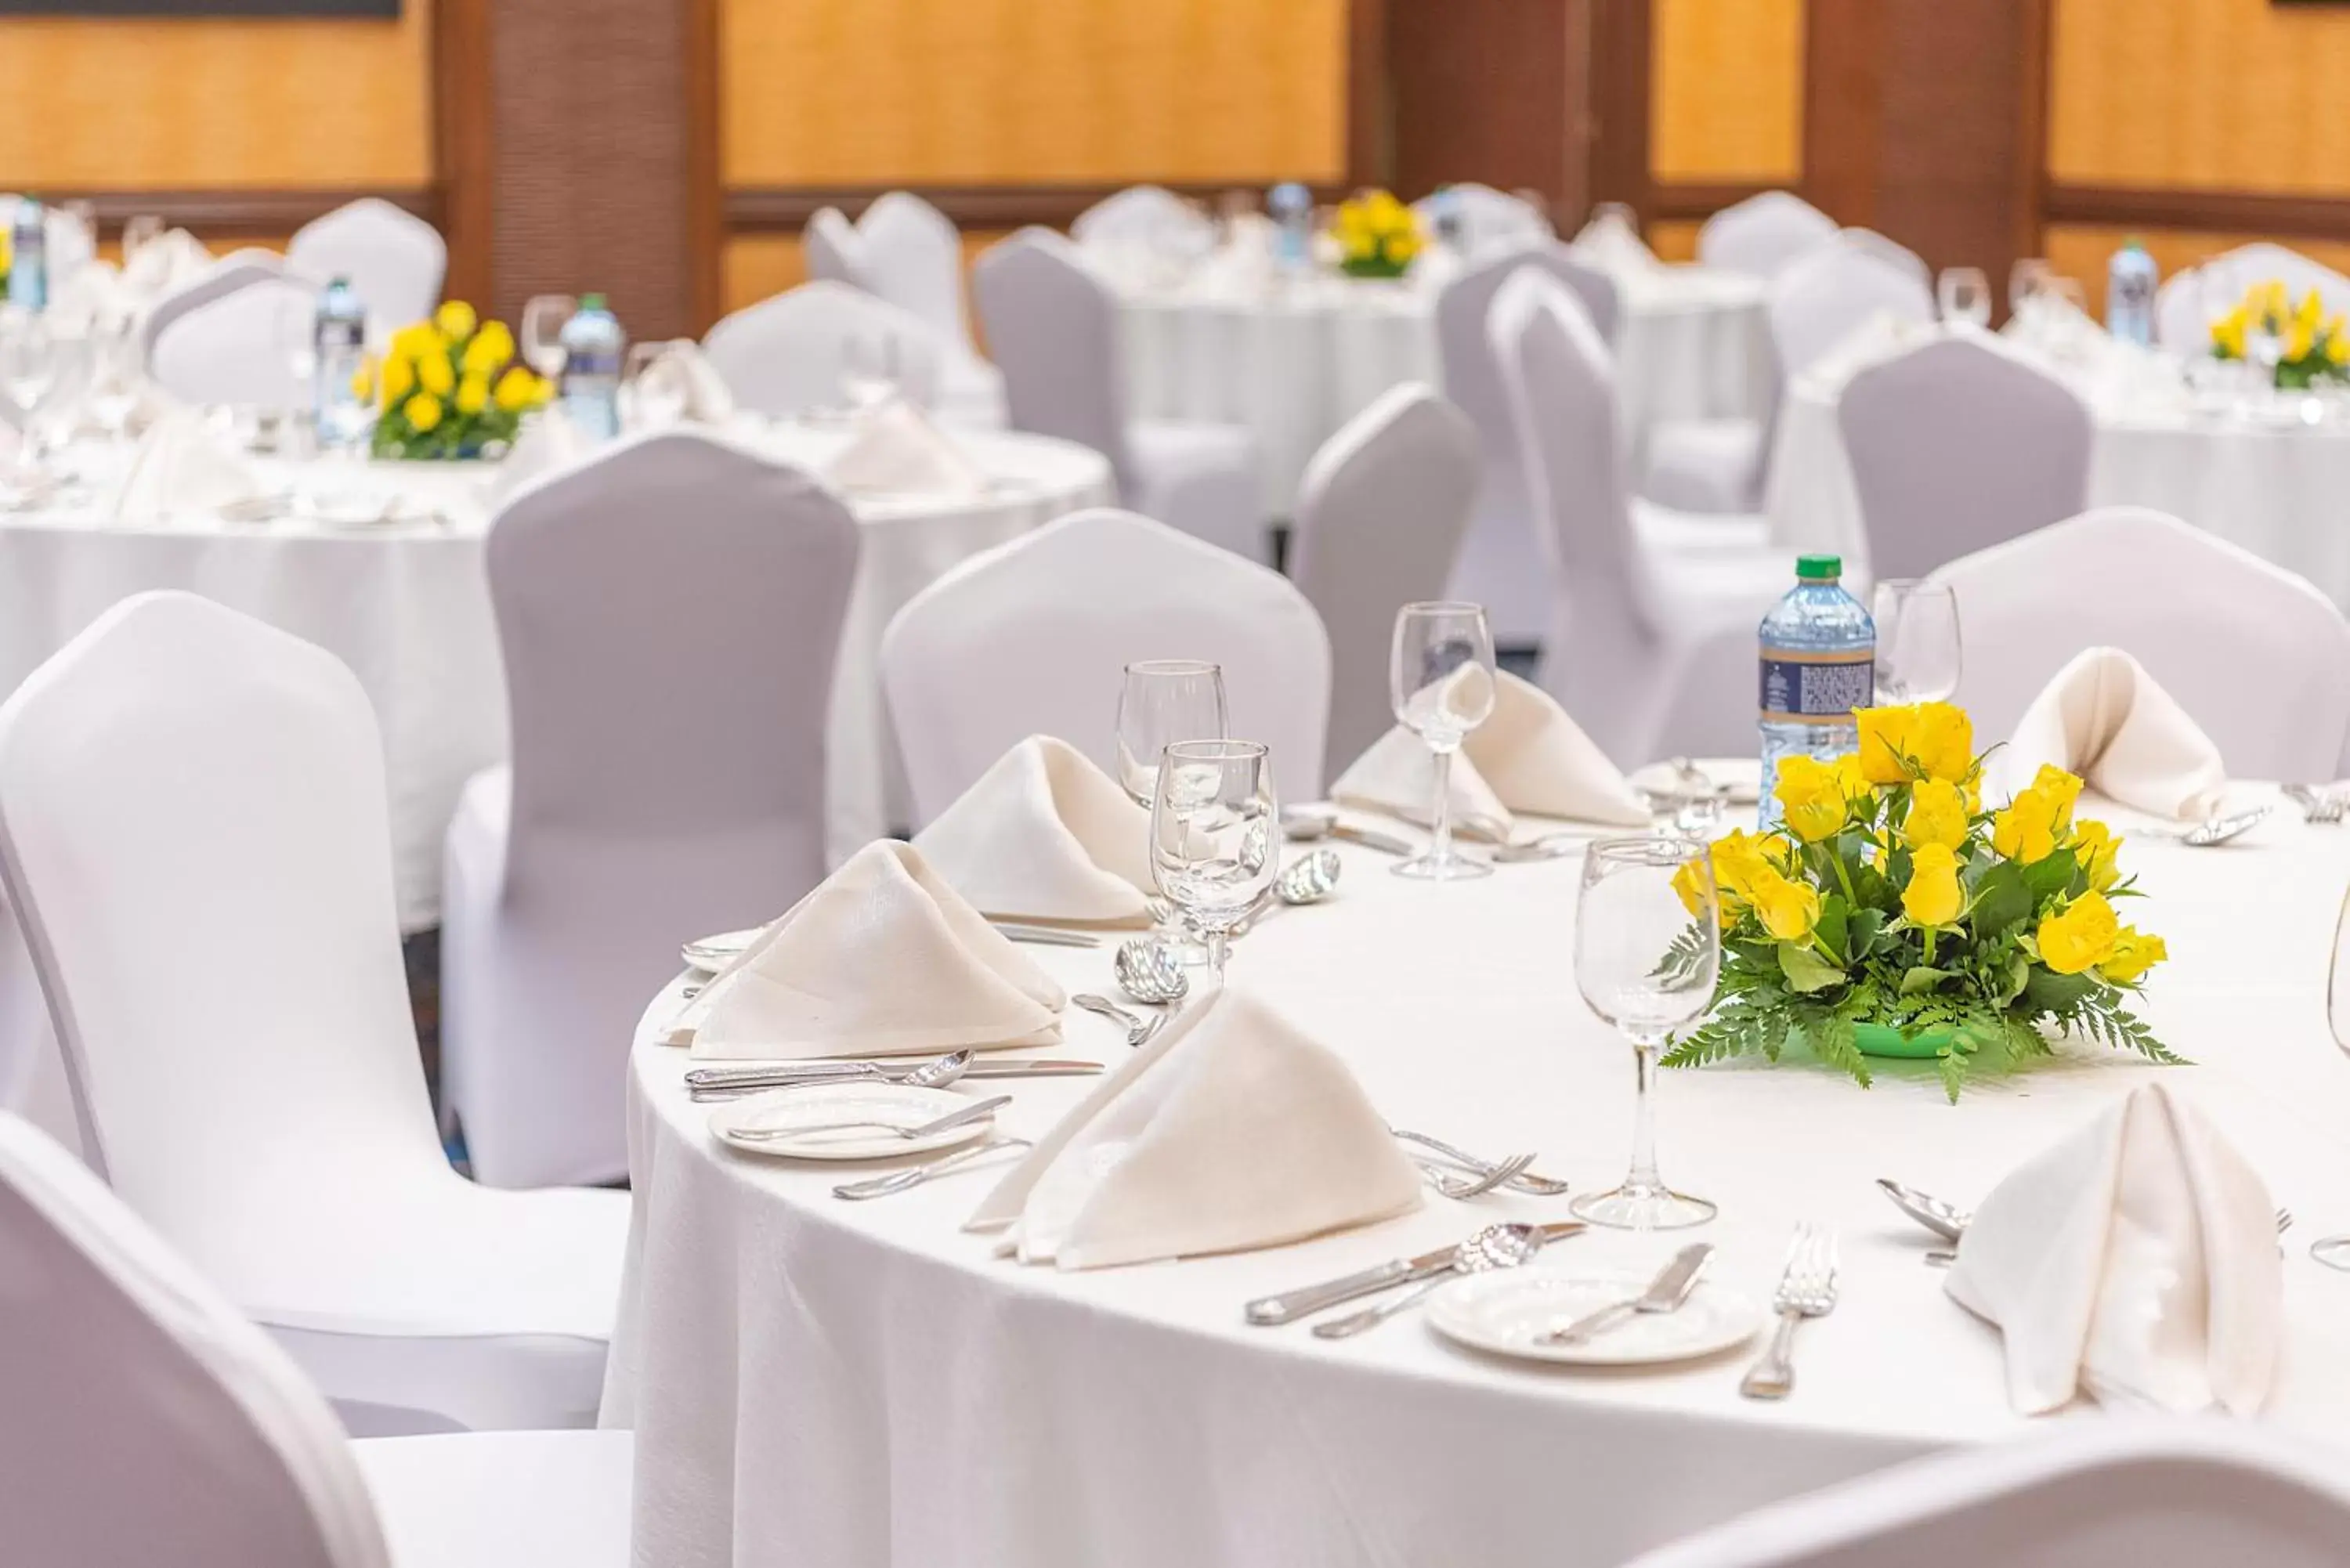 Banquet/Function facilities, Banquet Facilities in Nairobi Serena Hotel